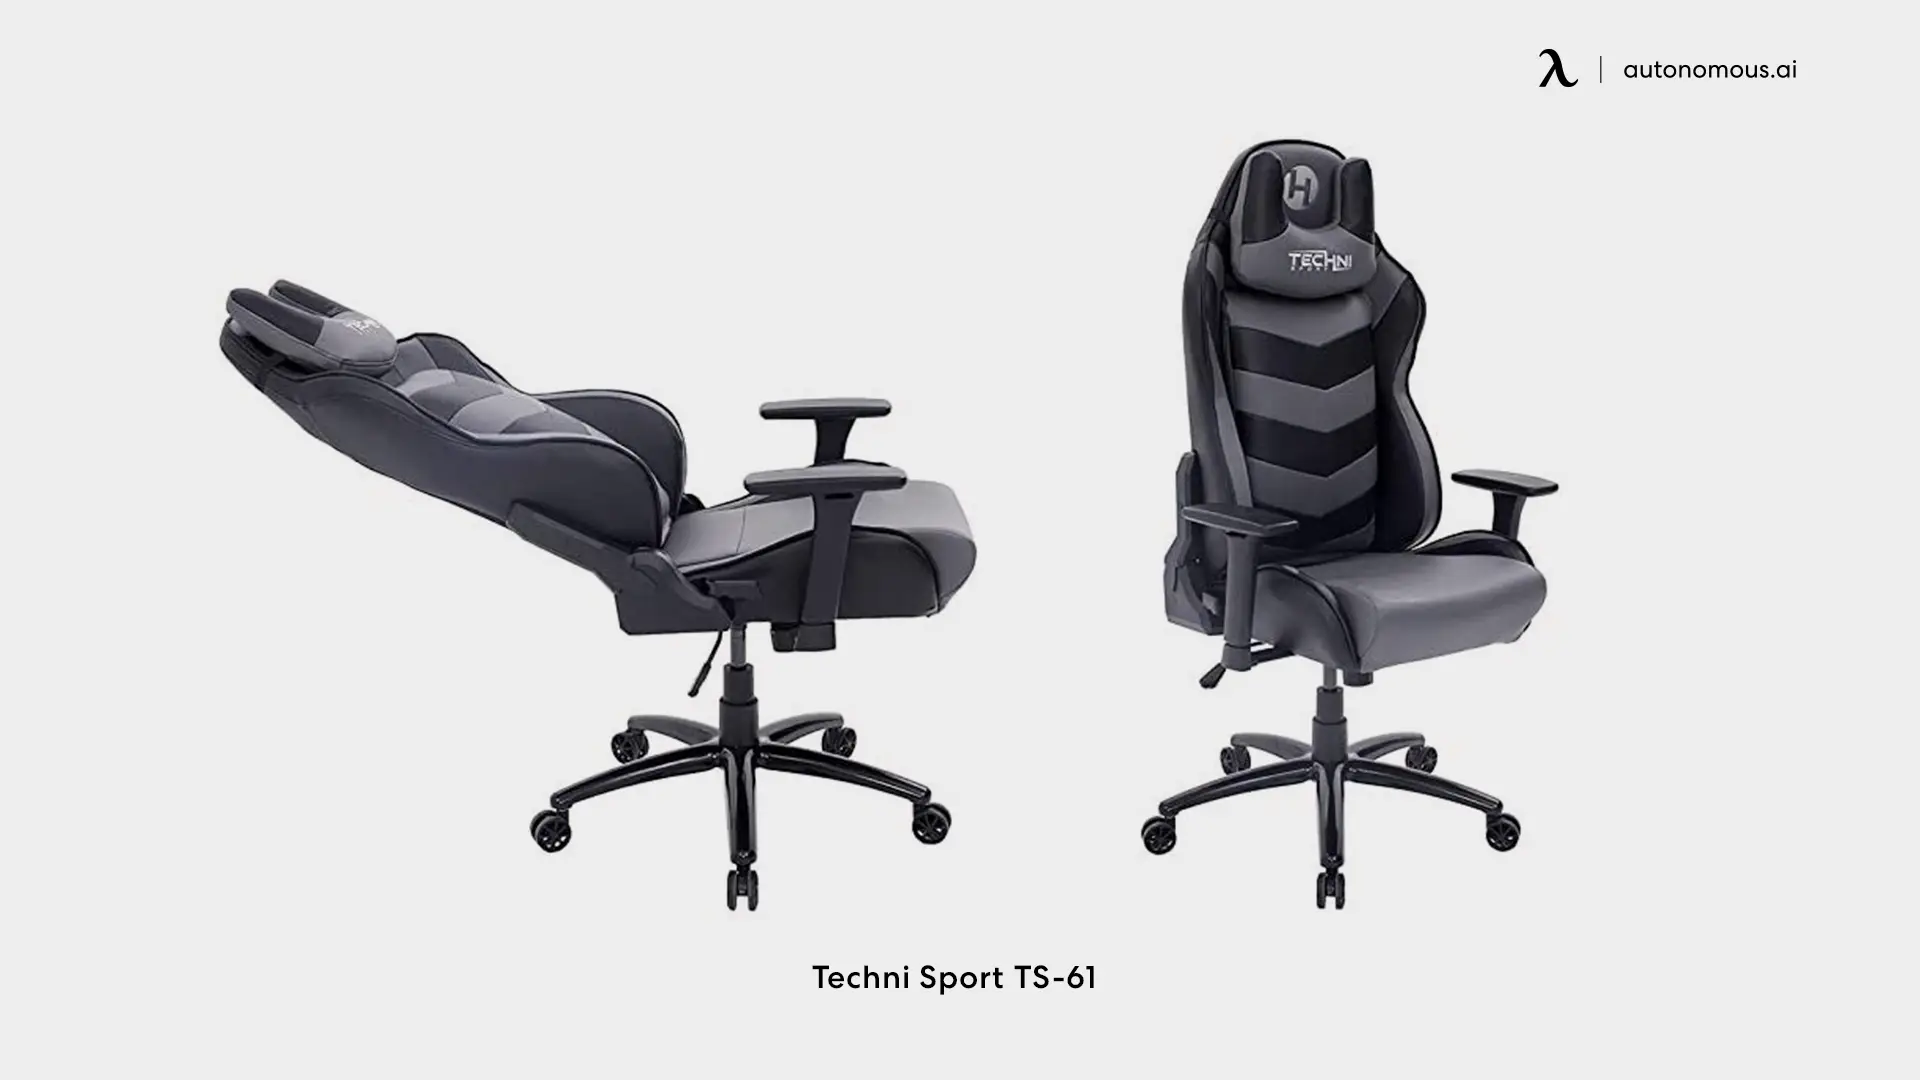 Techni Sport TS-61 - black friday gaming chairs